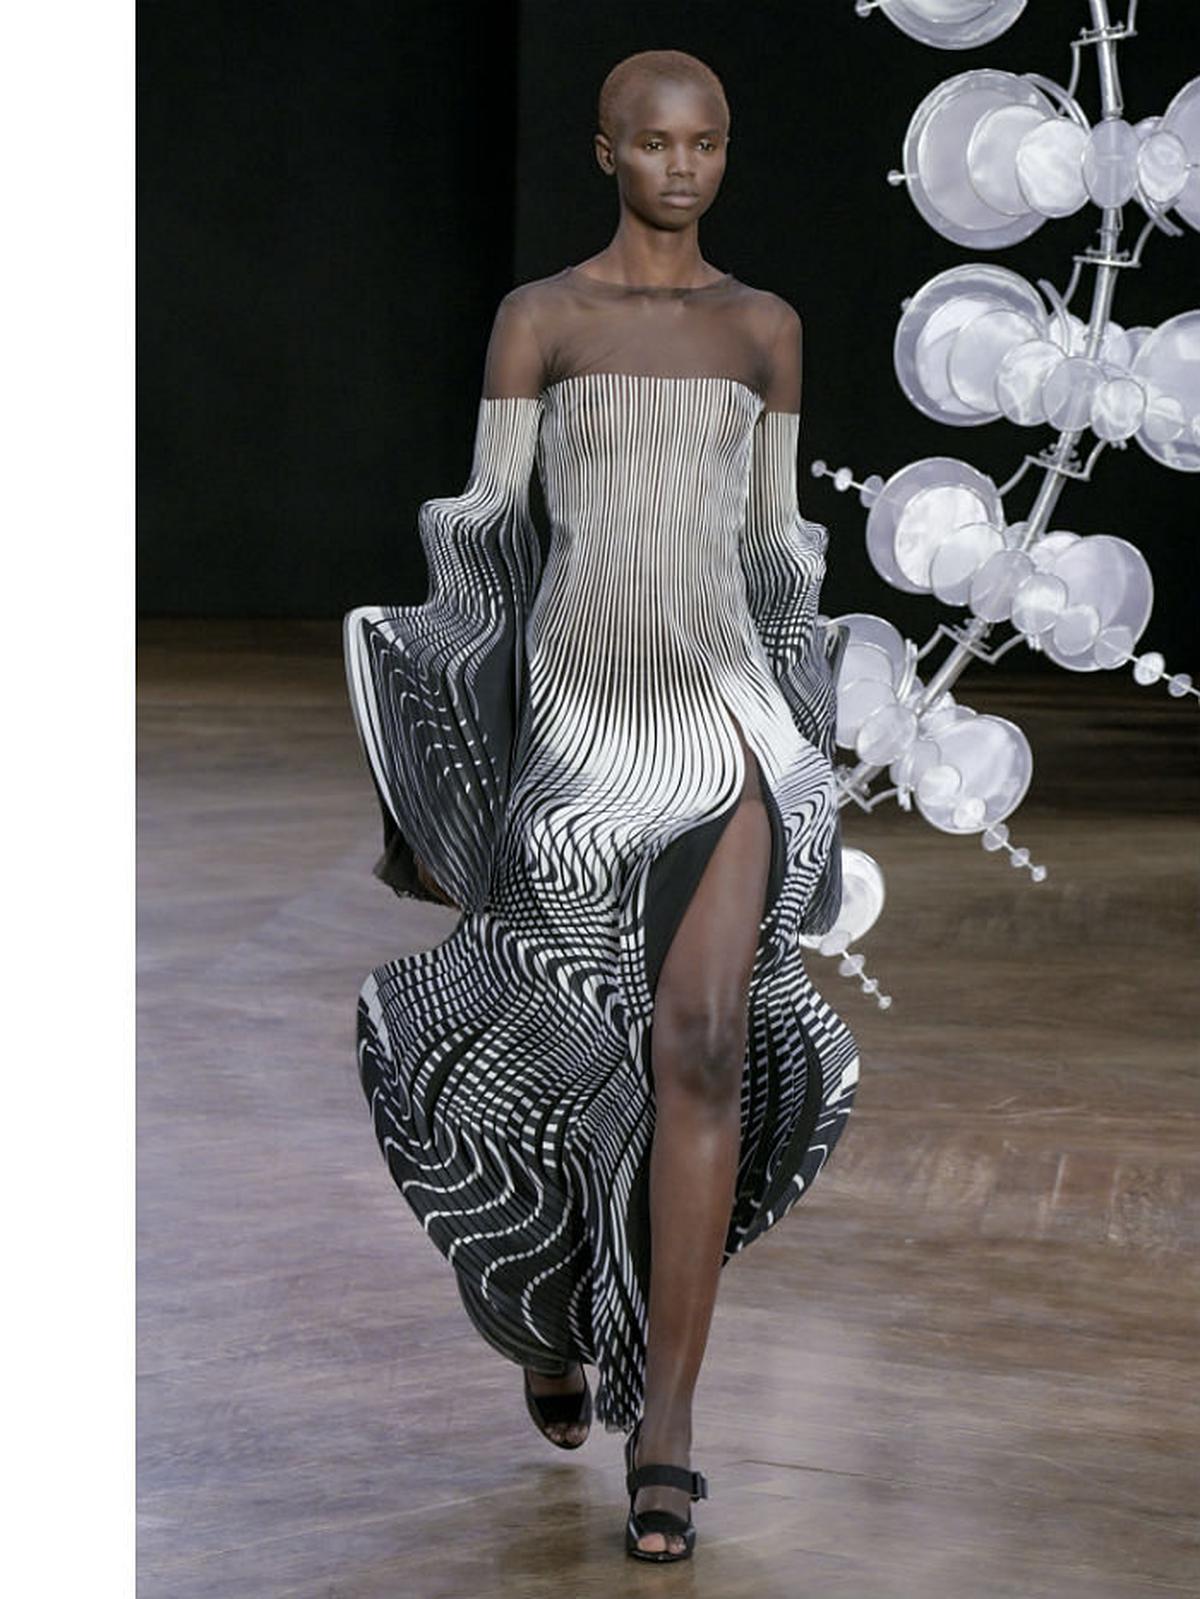 iris van herpen sculpts 'kinetic couture' that moves as models walk the  runway